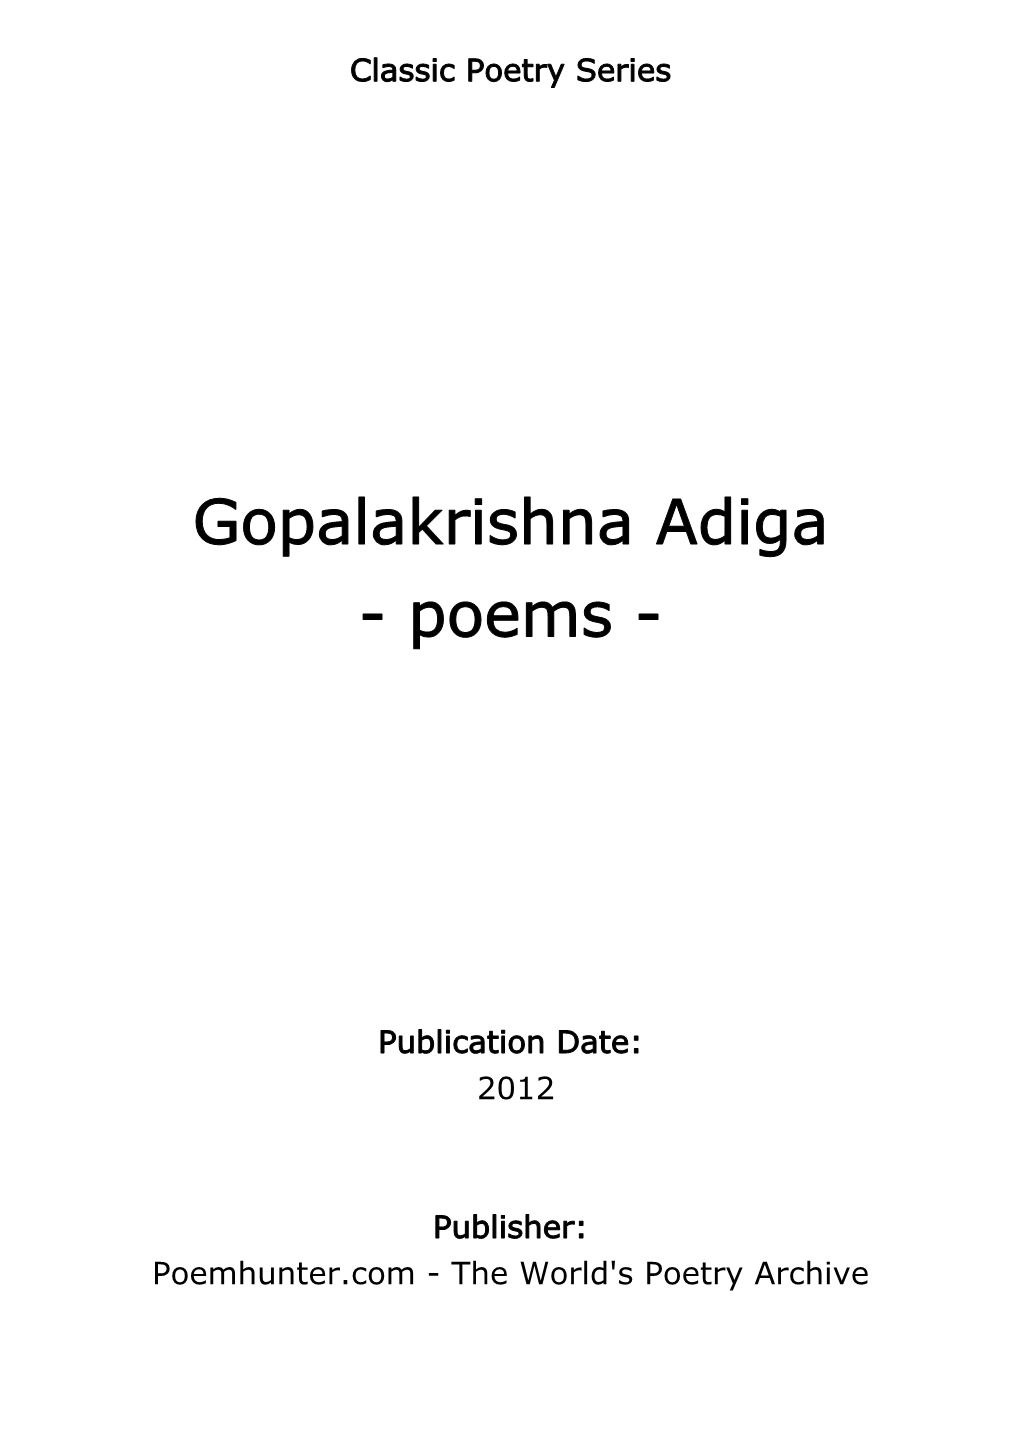 Gopalakrishna Adiga - Poems